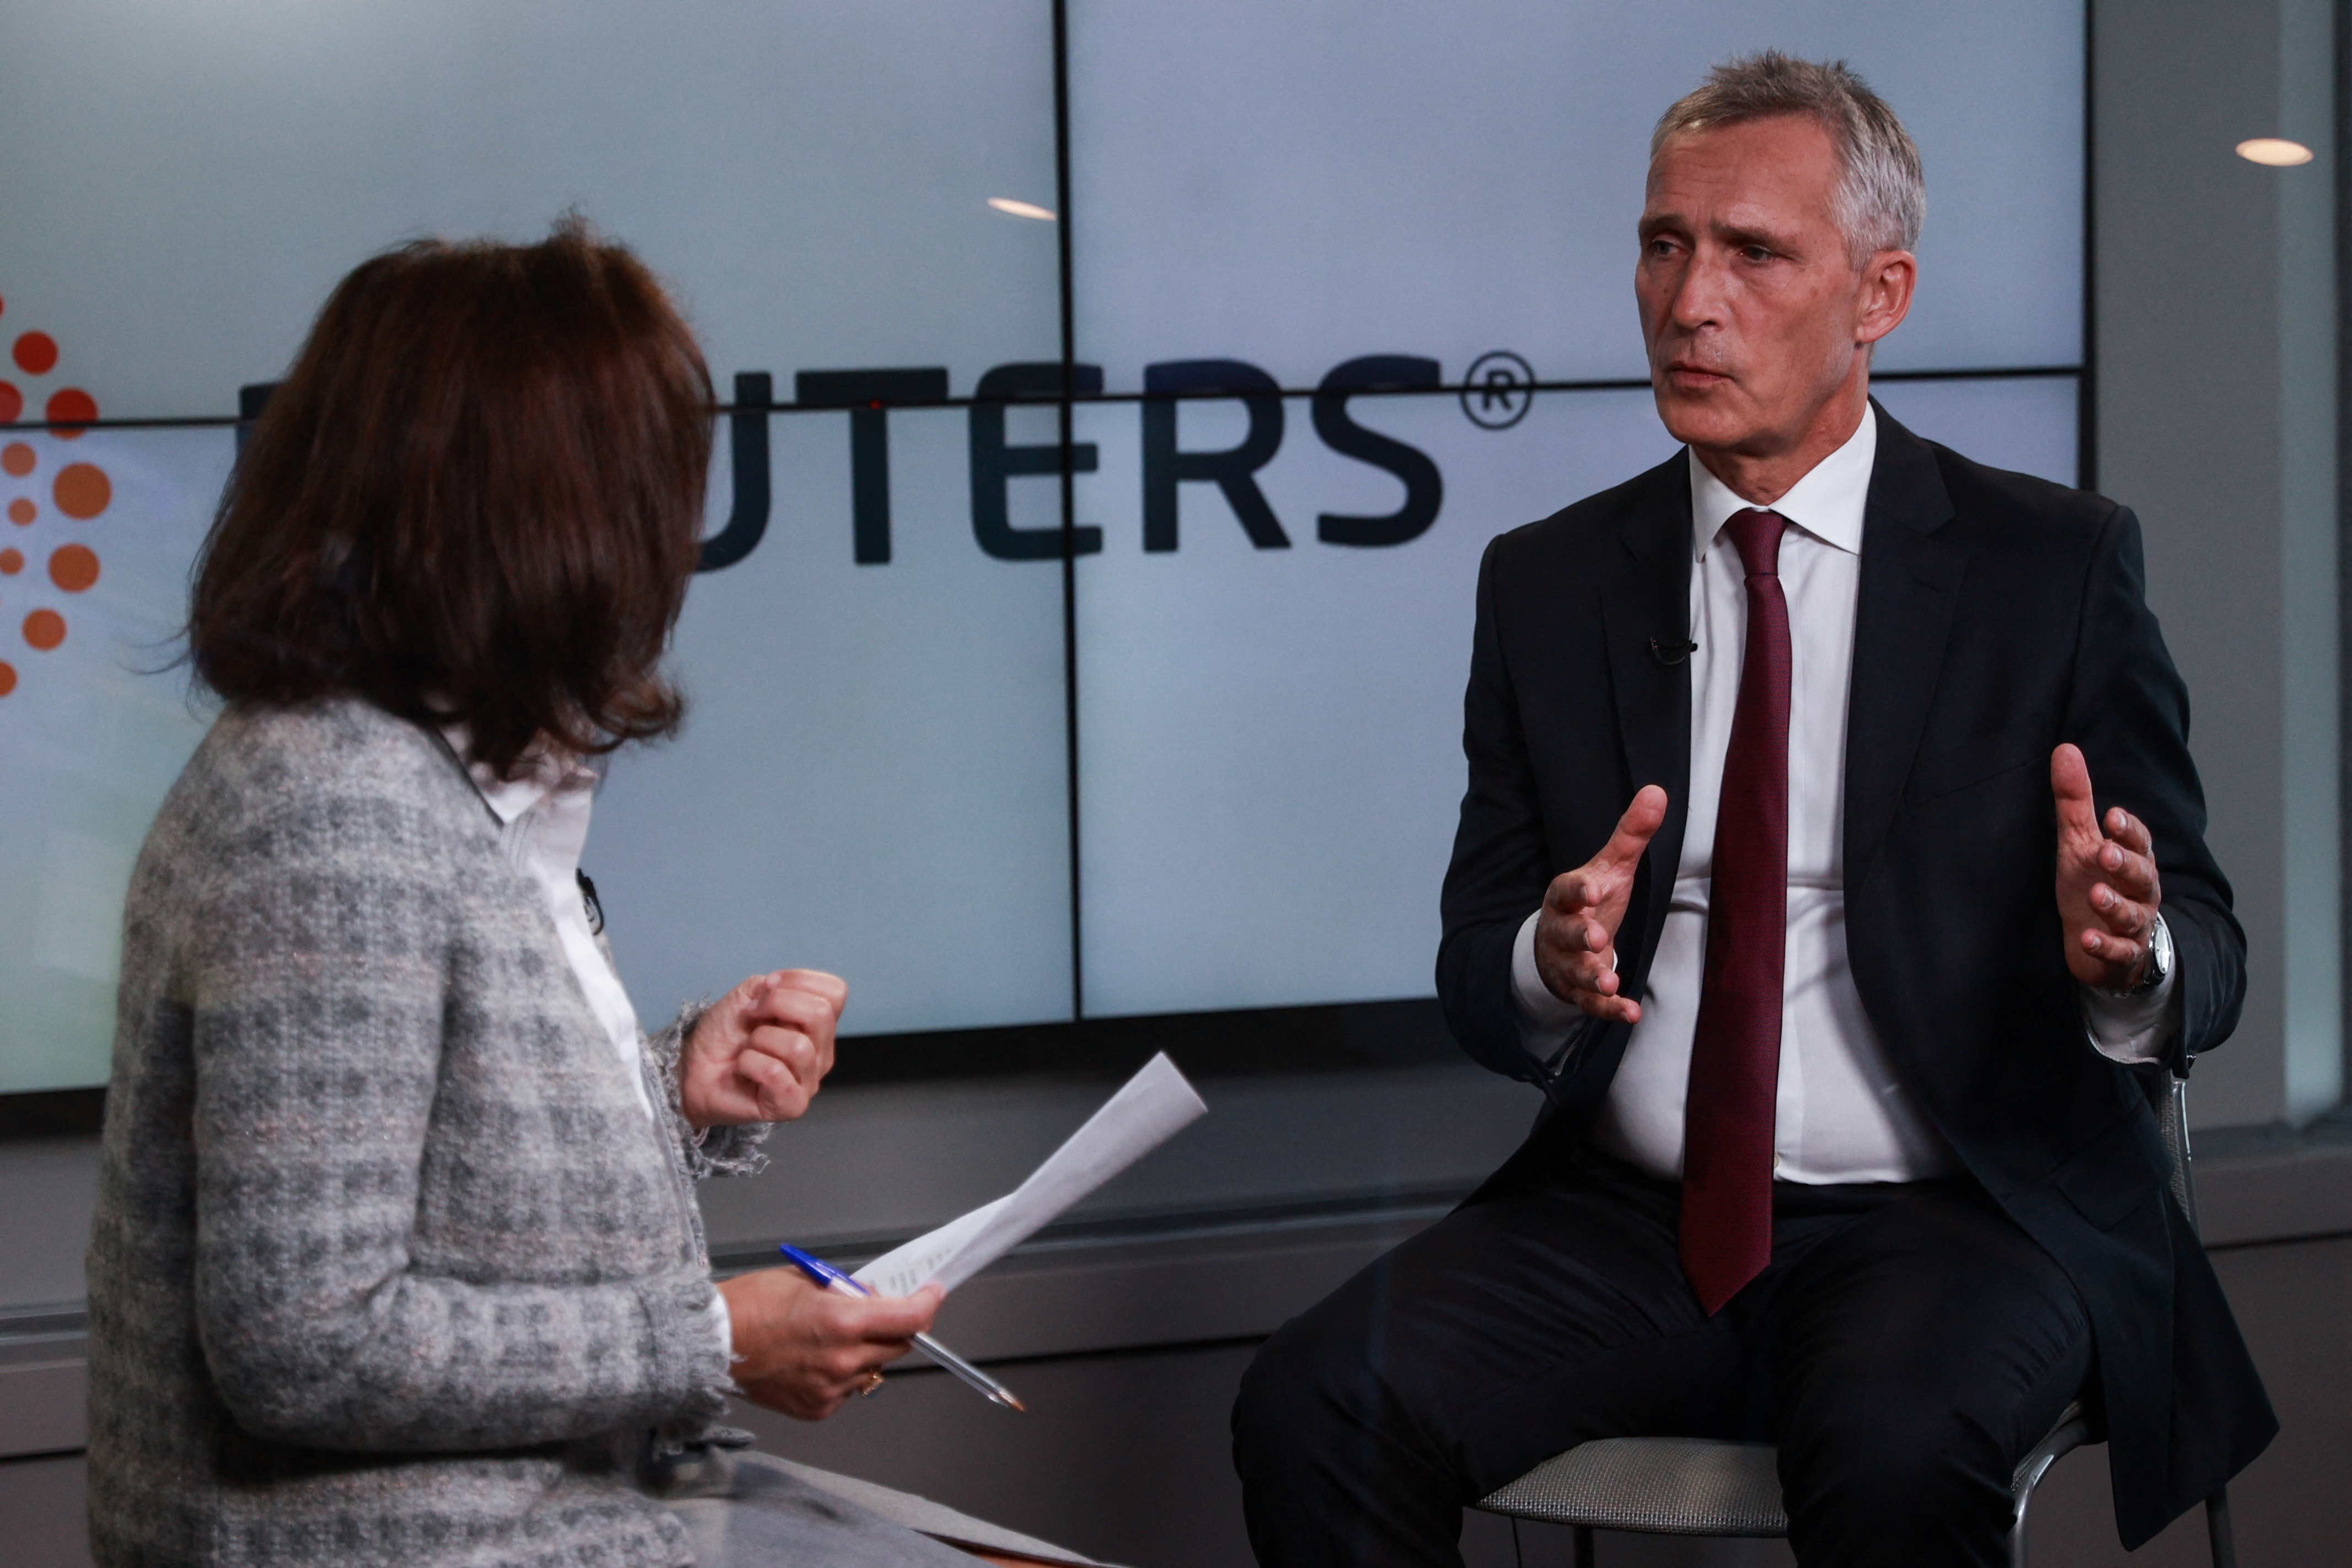 Reuters Editor-in-Chief Alessandra Galloni interviews NATO Secretary General Jens Stoltenberg in New York